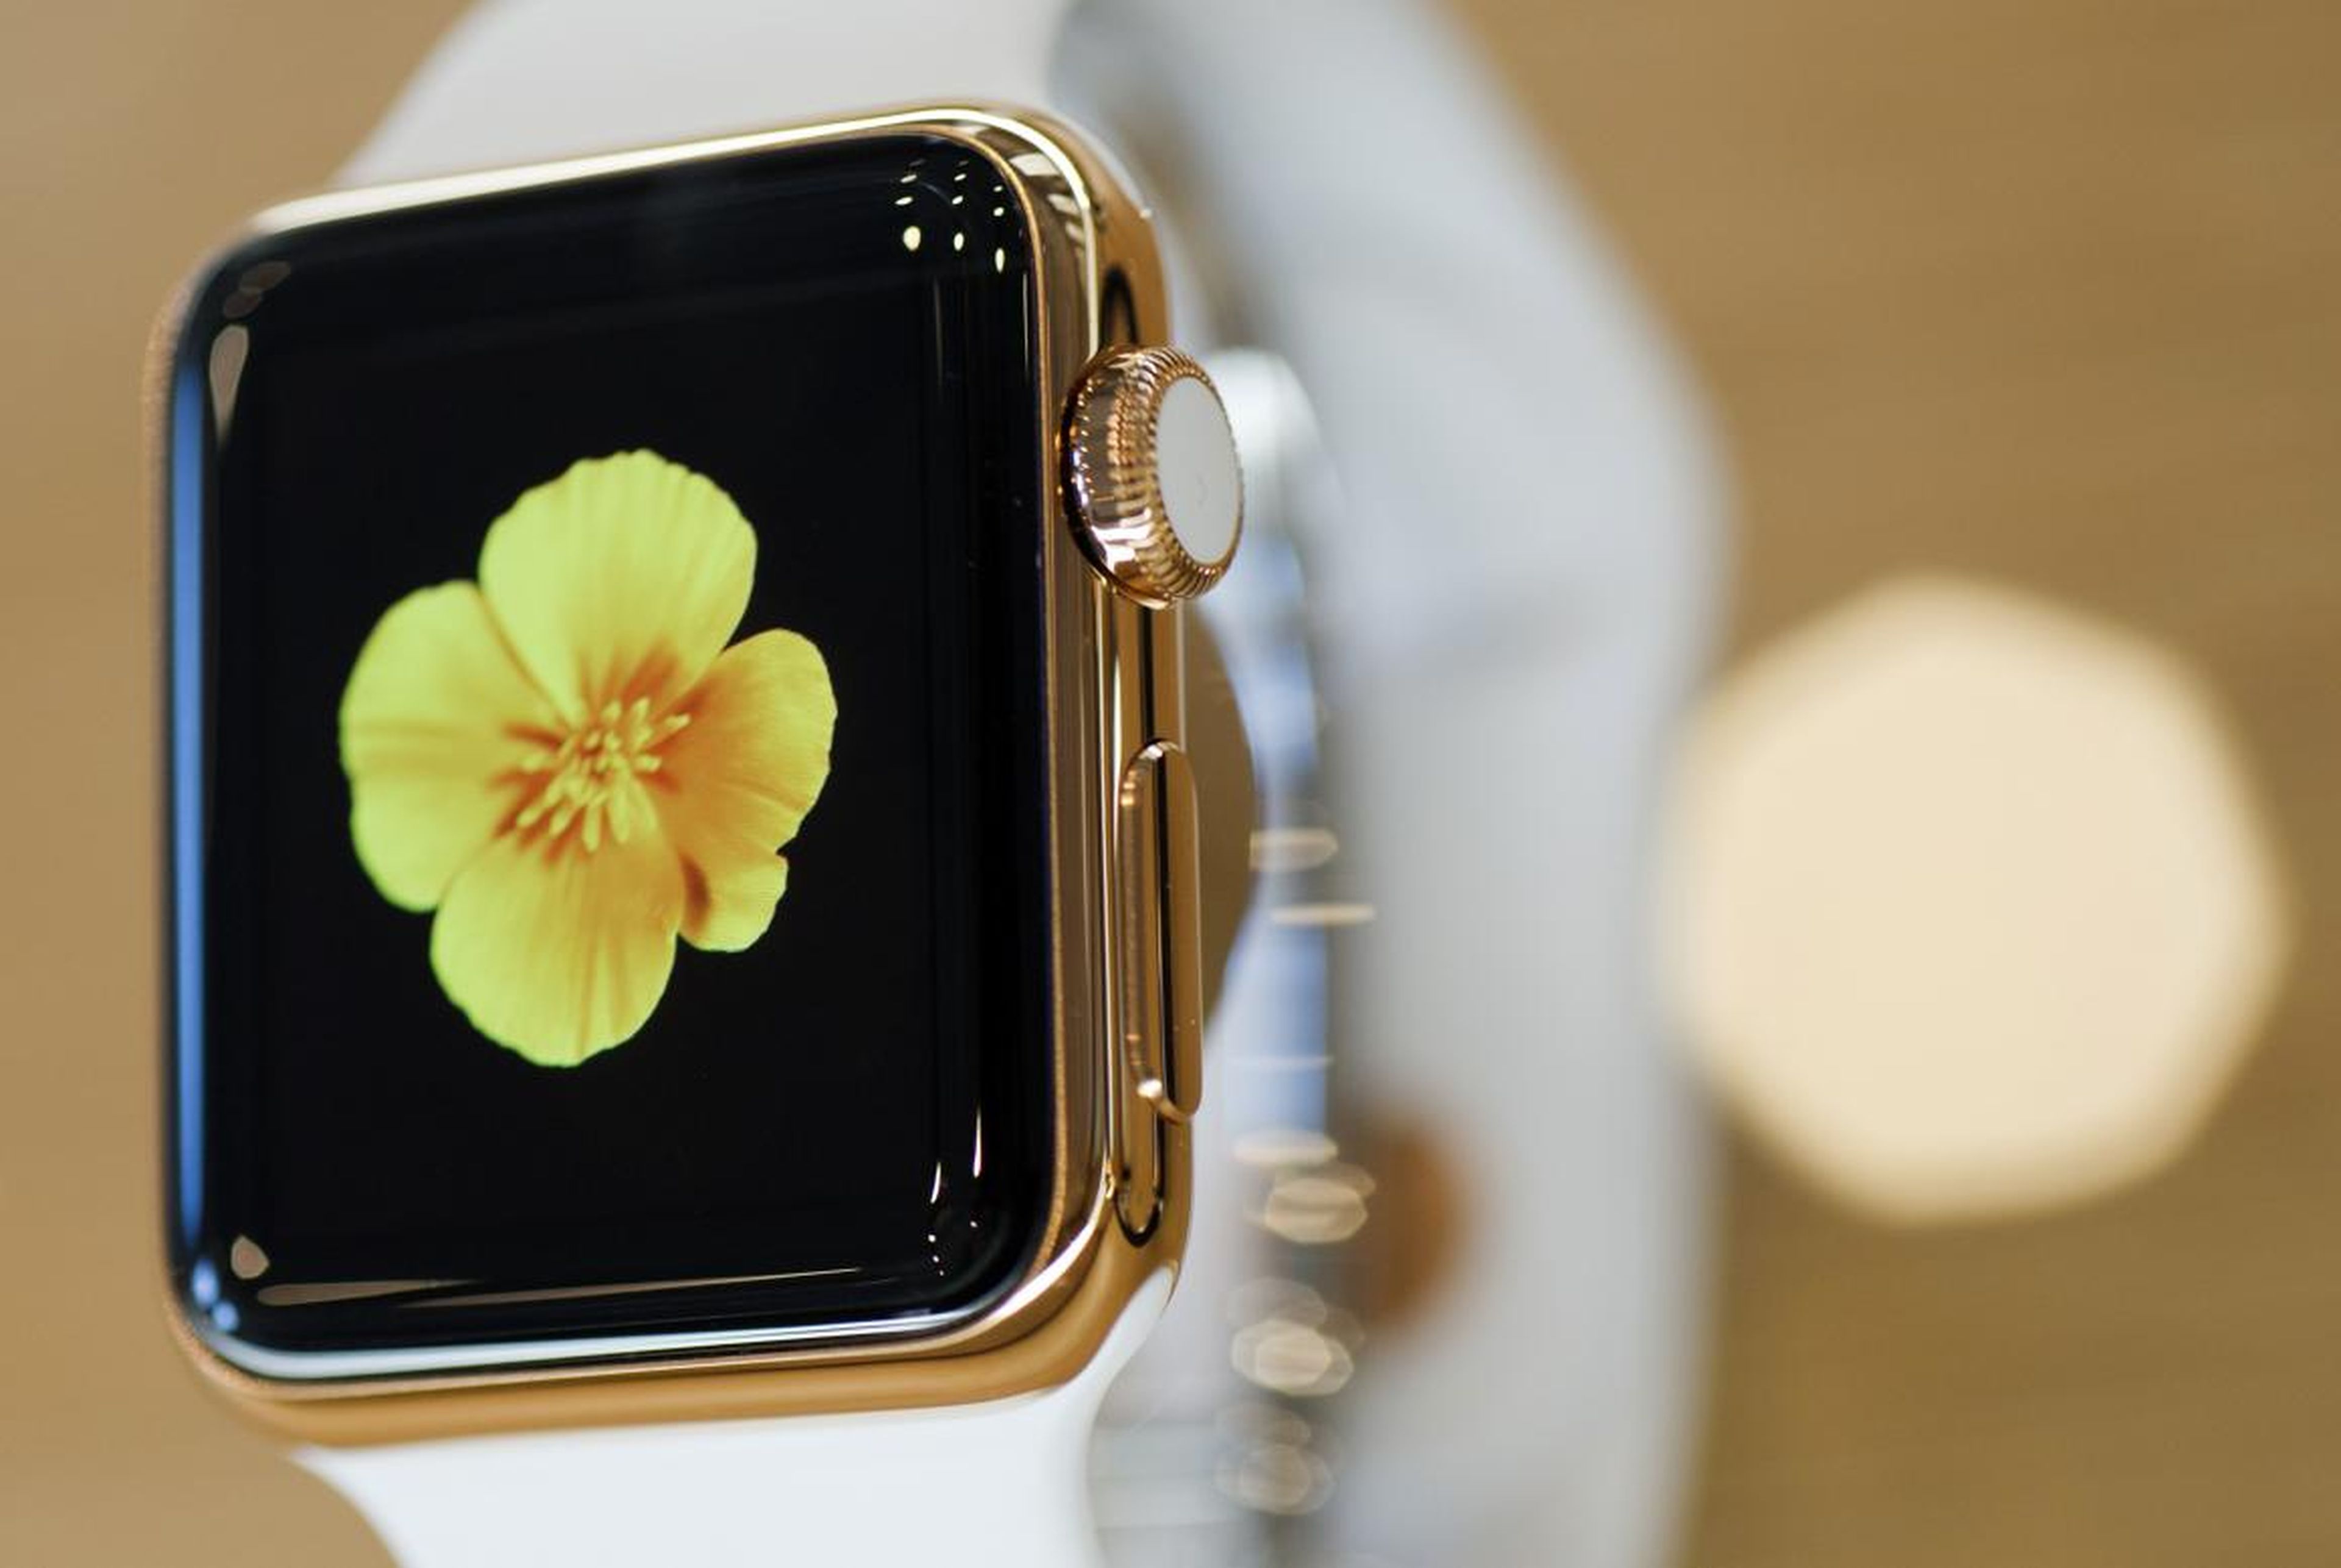 2. Apple Watch Edition (2015) — $17,000